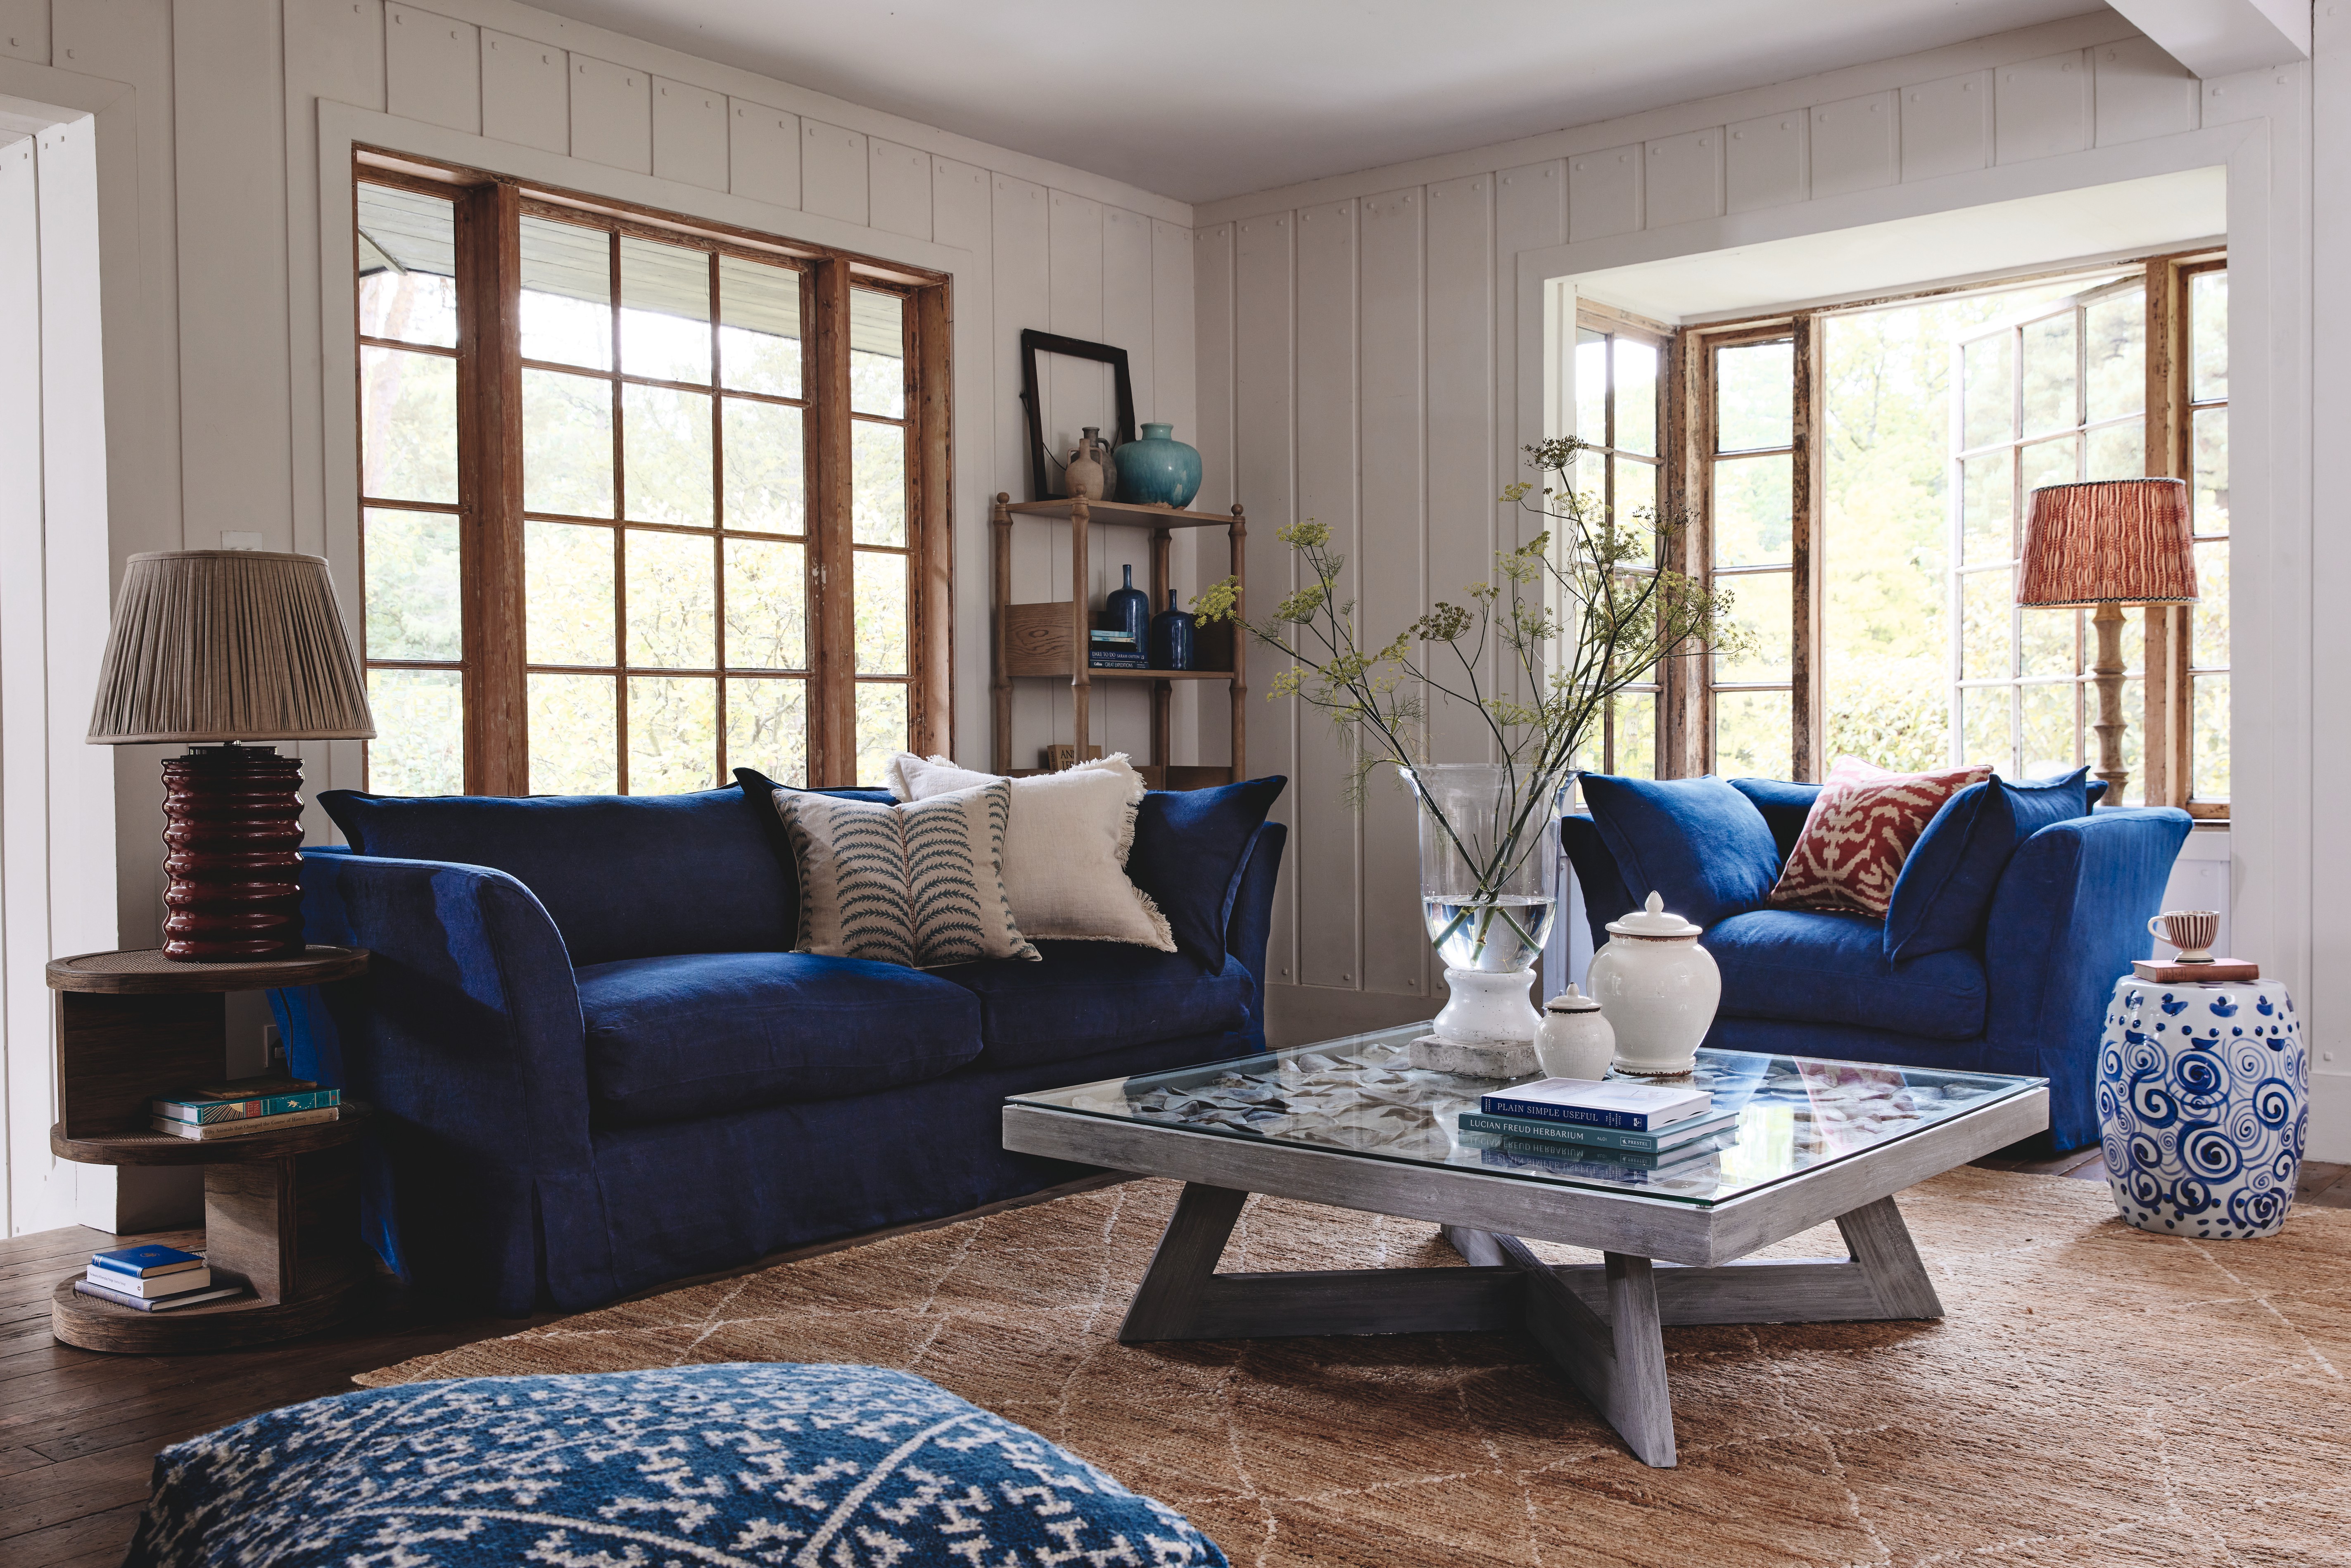 Blue room ideas 20 fresh decor schemes to inspire you   Homes ...